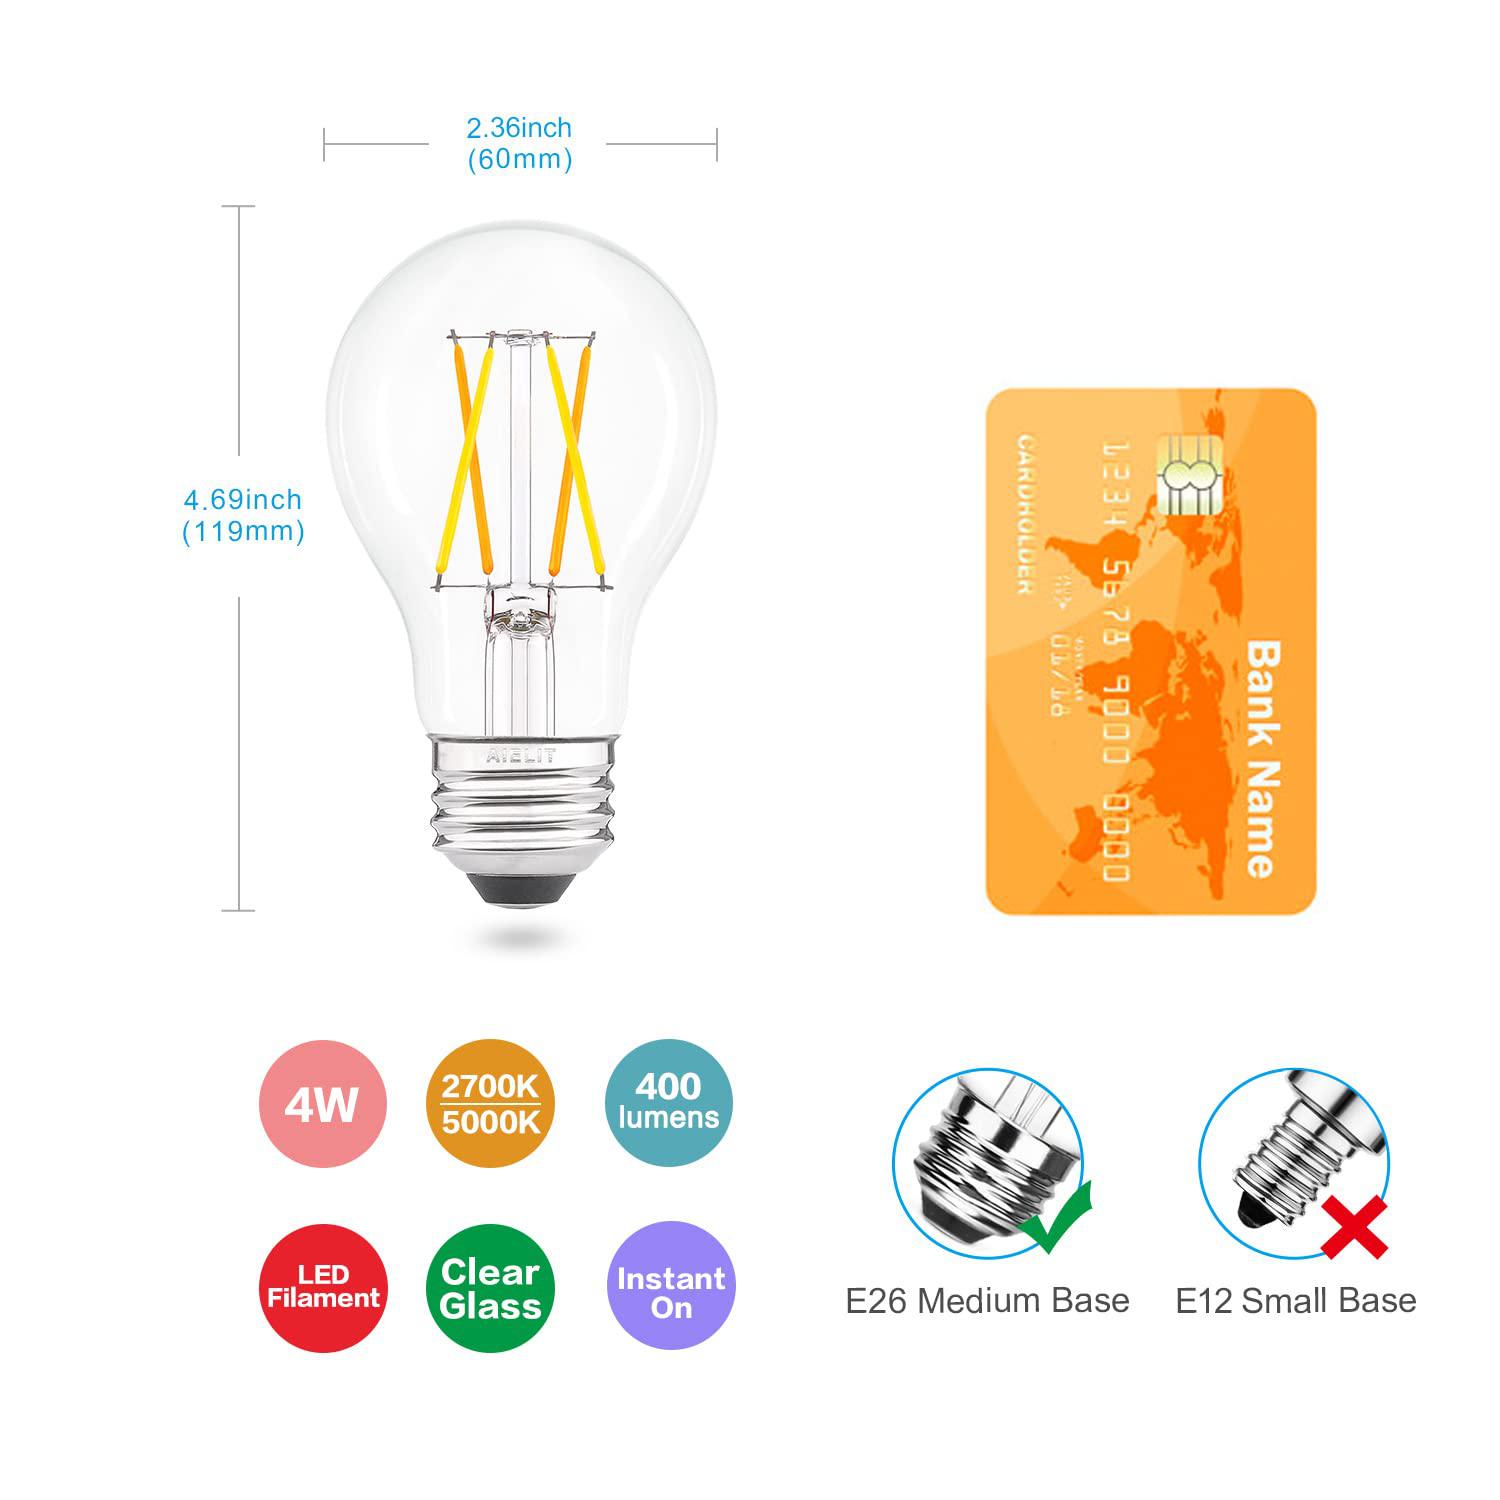 AIELIT remote control smart edison a19 led light bulbs- e26 standard base- dimmable 4w(40w equivalent)- adjustable color temperature